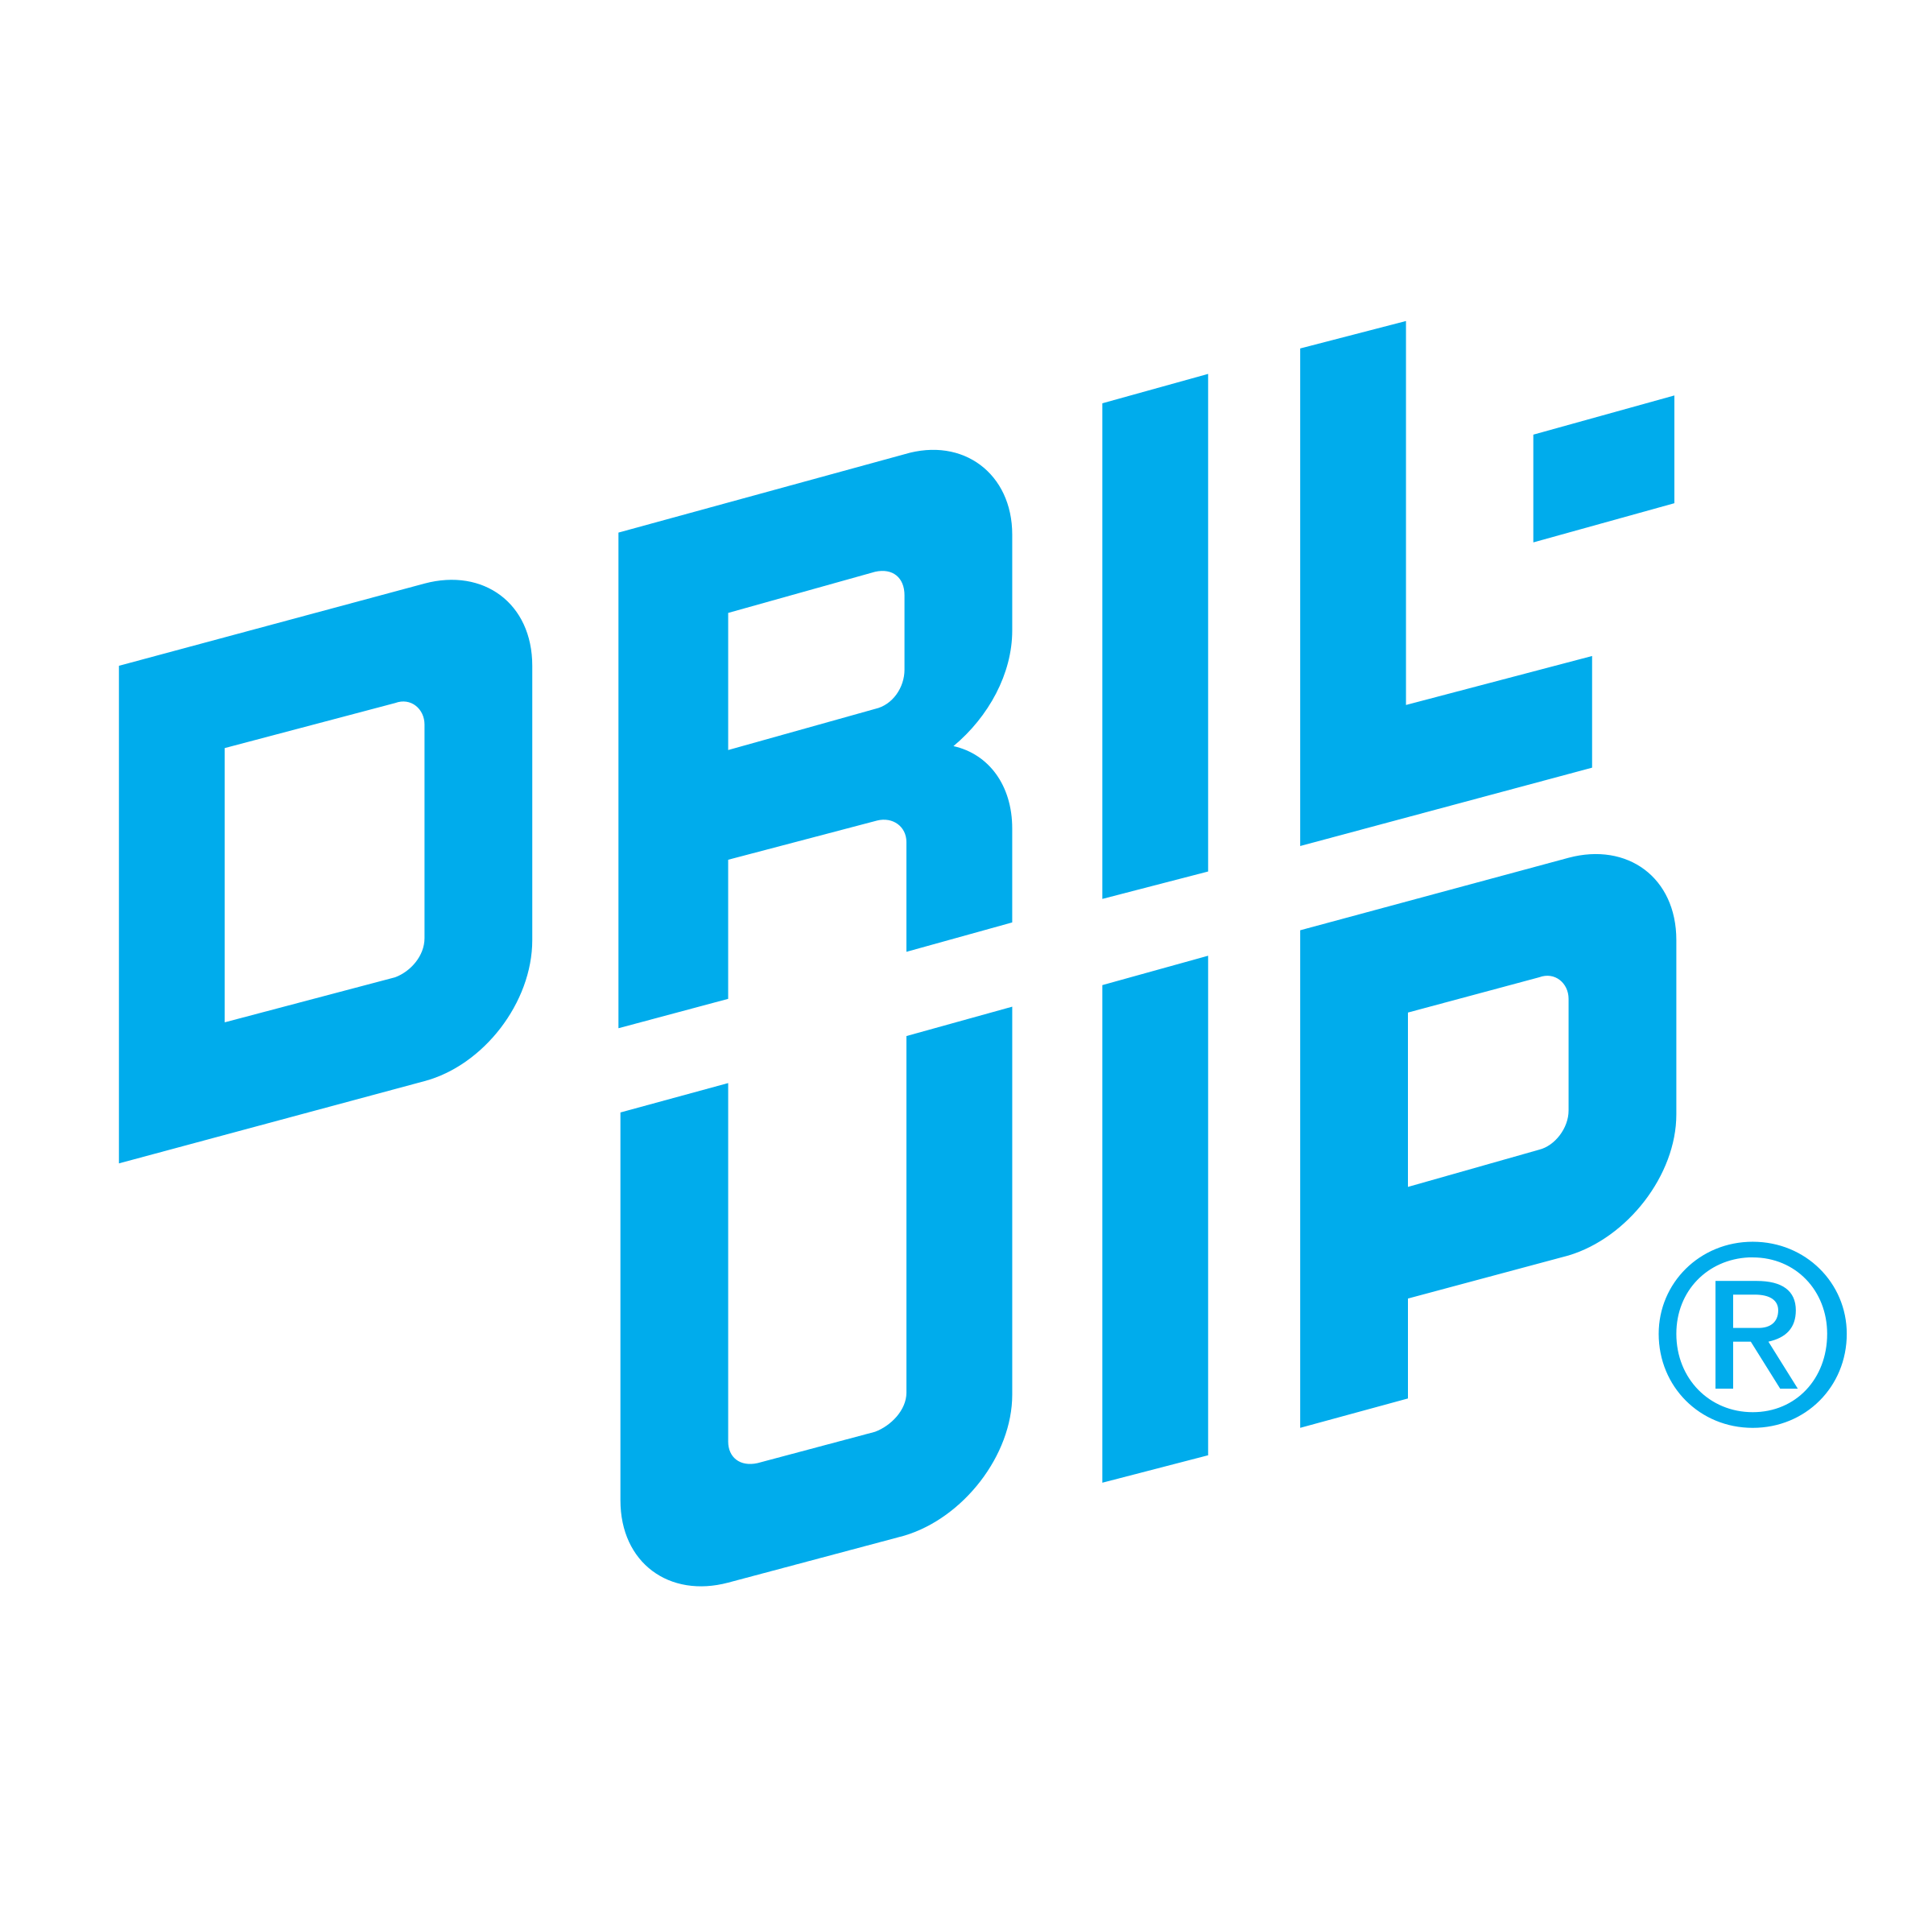 Quip Logo - Dril Quip Logo PNG Transparent & SVG Vector - Freebie Supply